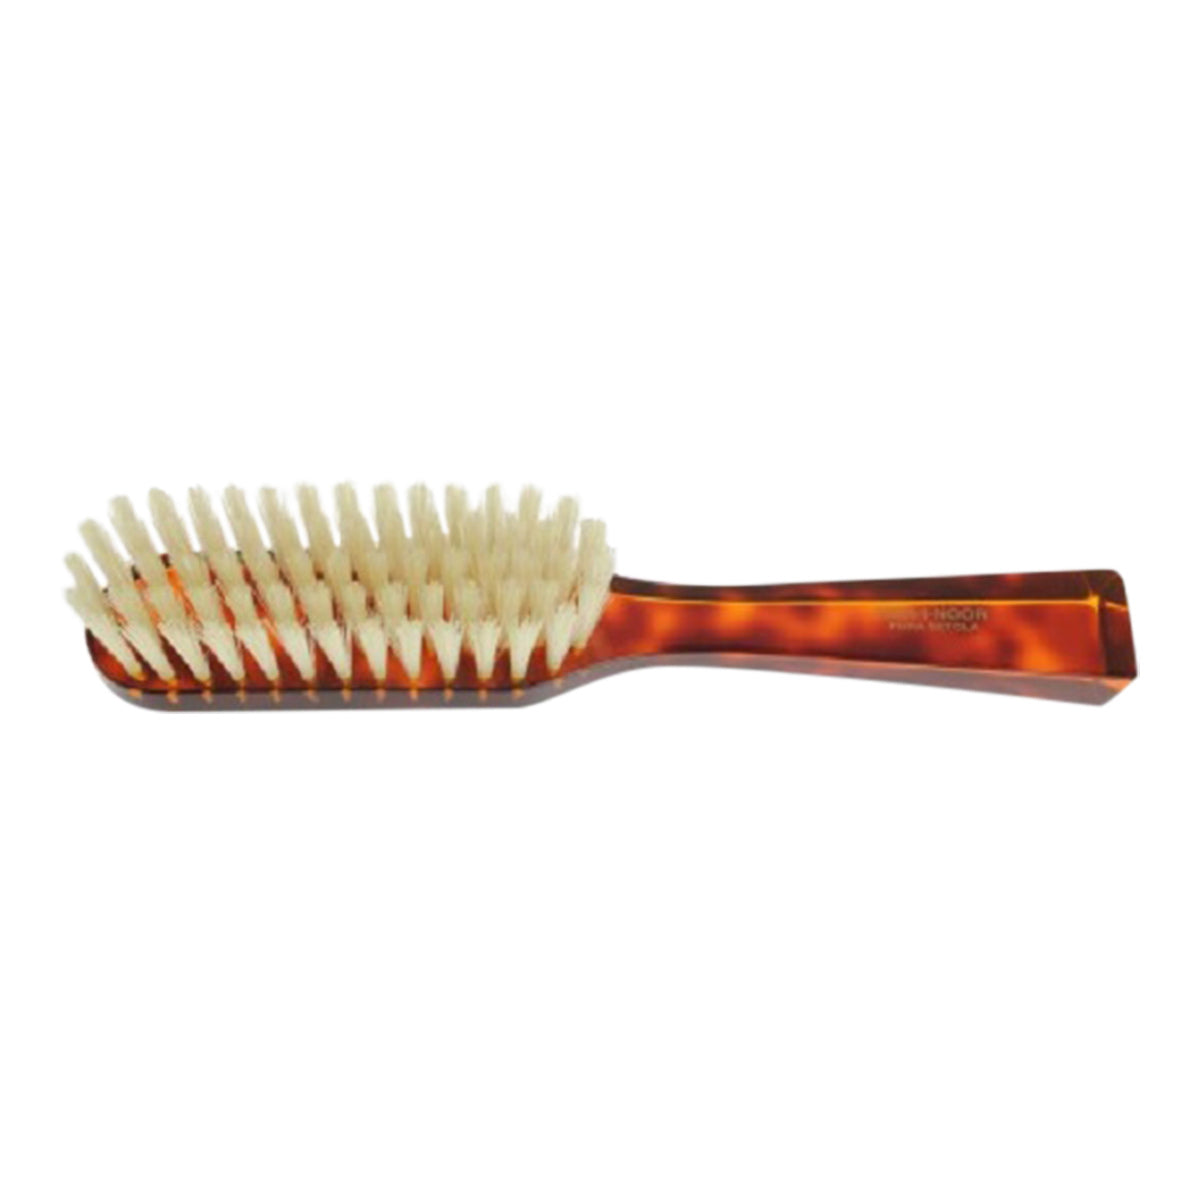 Primary image of Jaspe White Boar Bristle Hairbrush (Narrow)